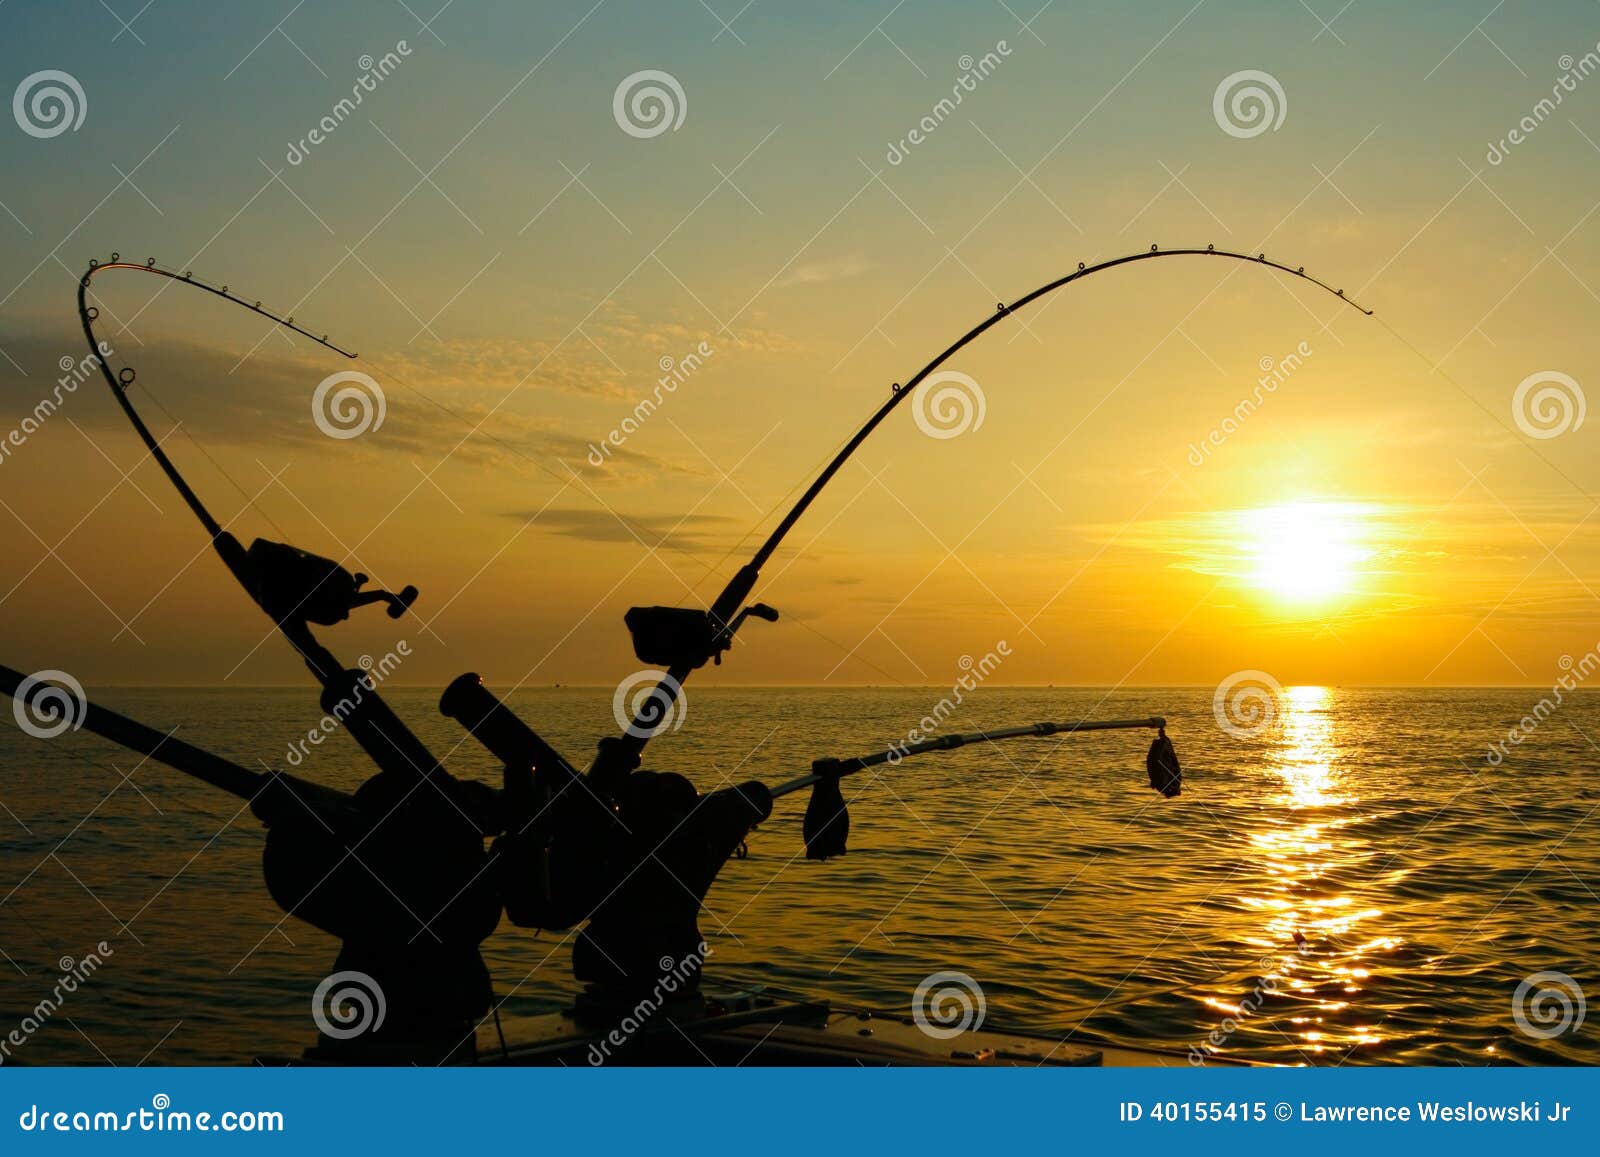 Downrigger Fishing Rods for Salmon at Sunrise Stock Image - Image